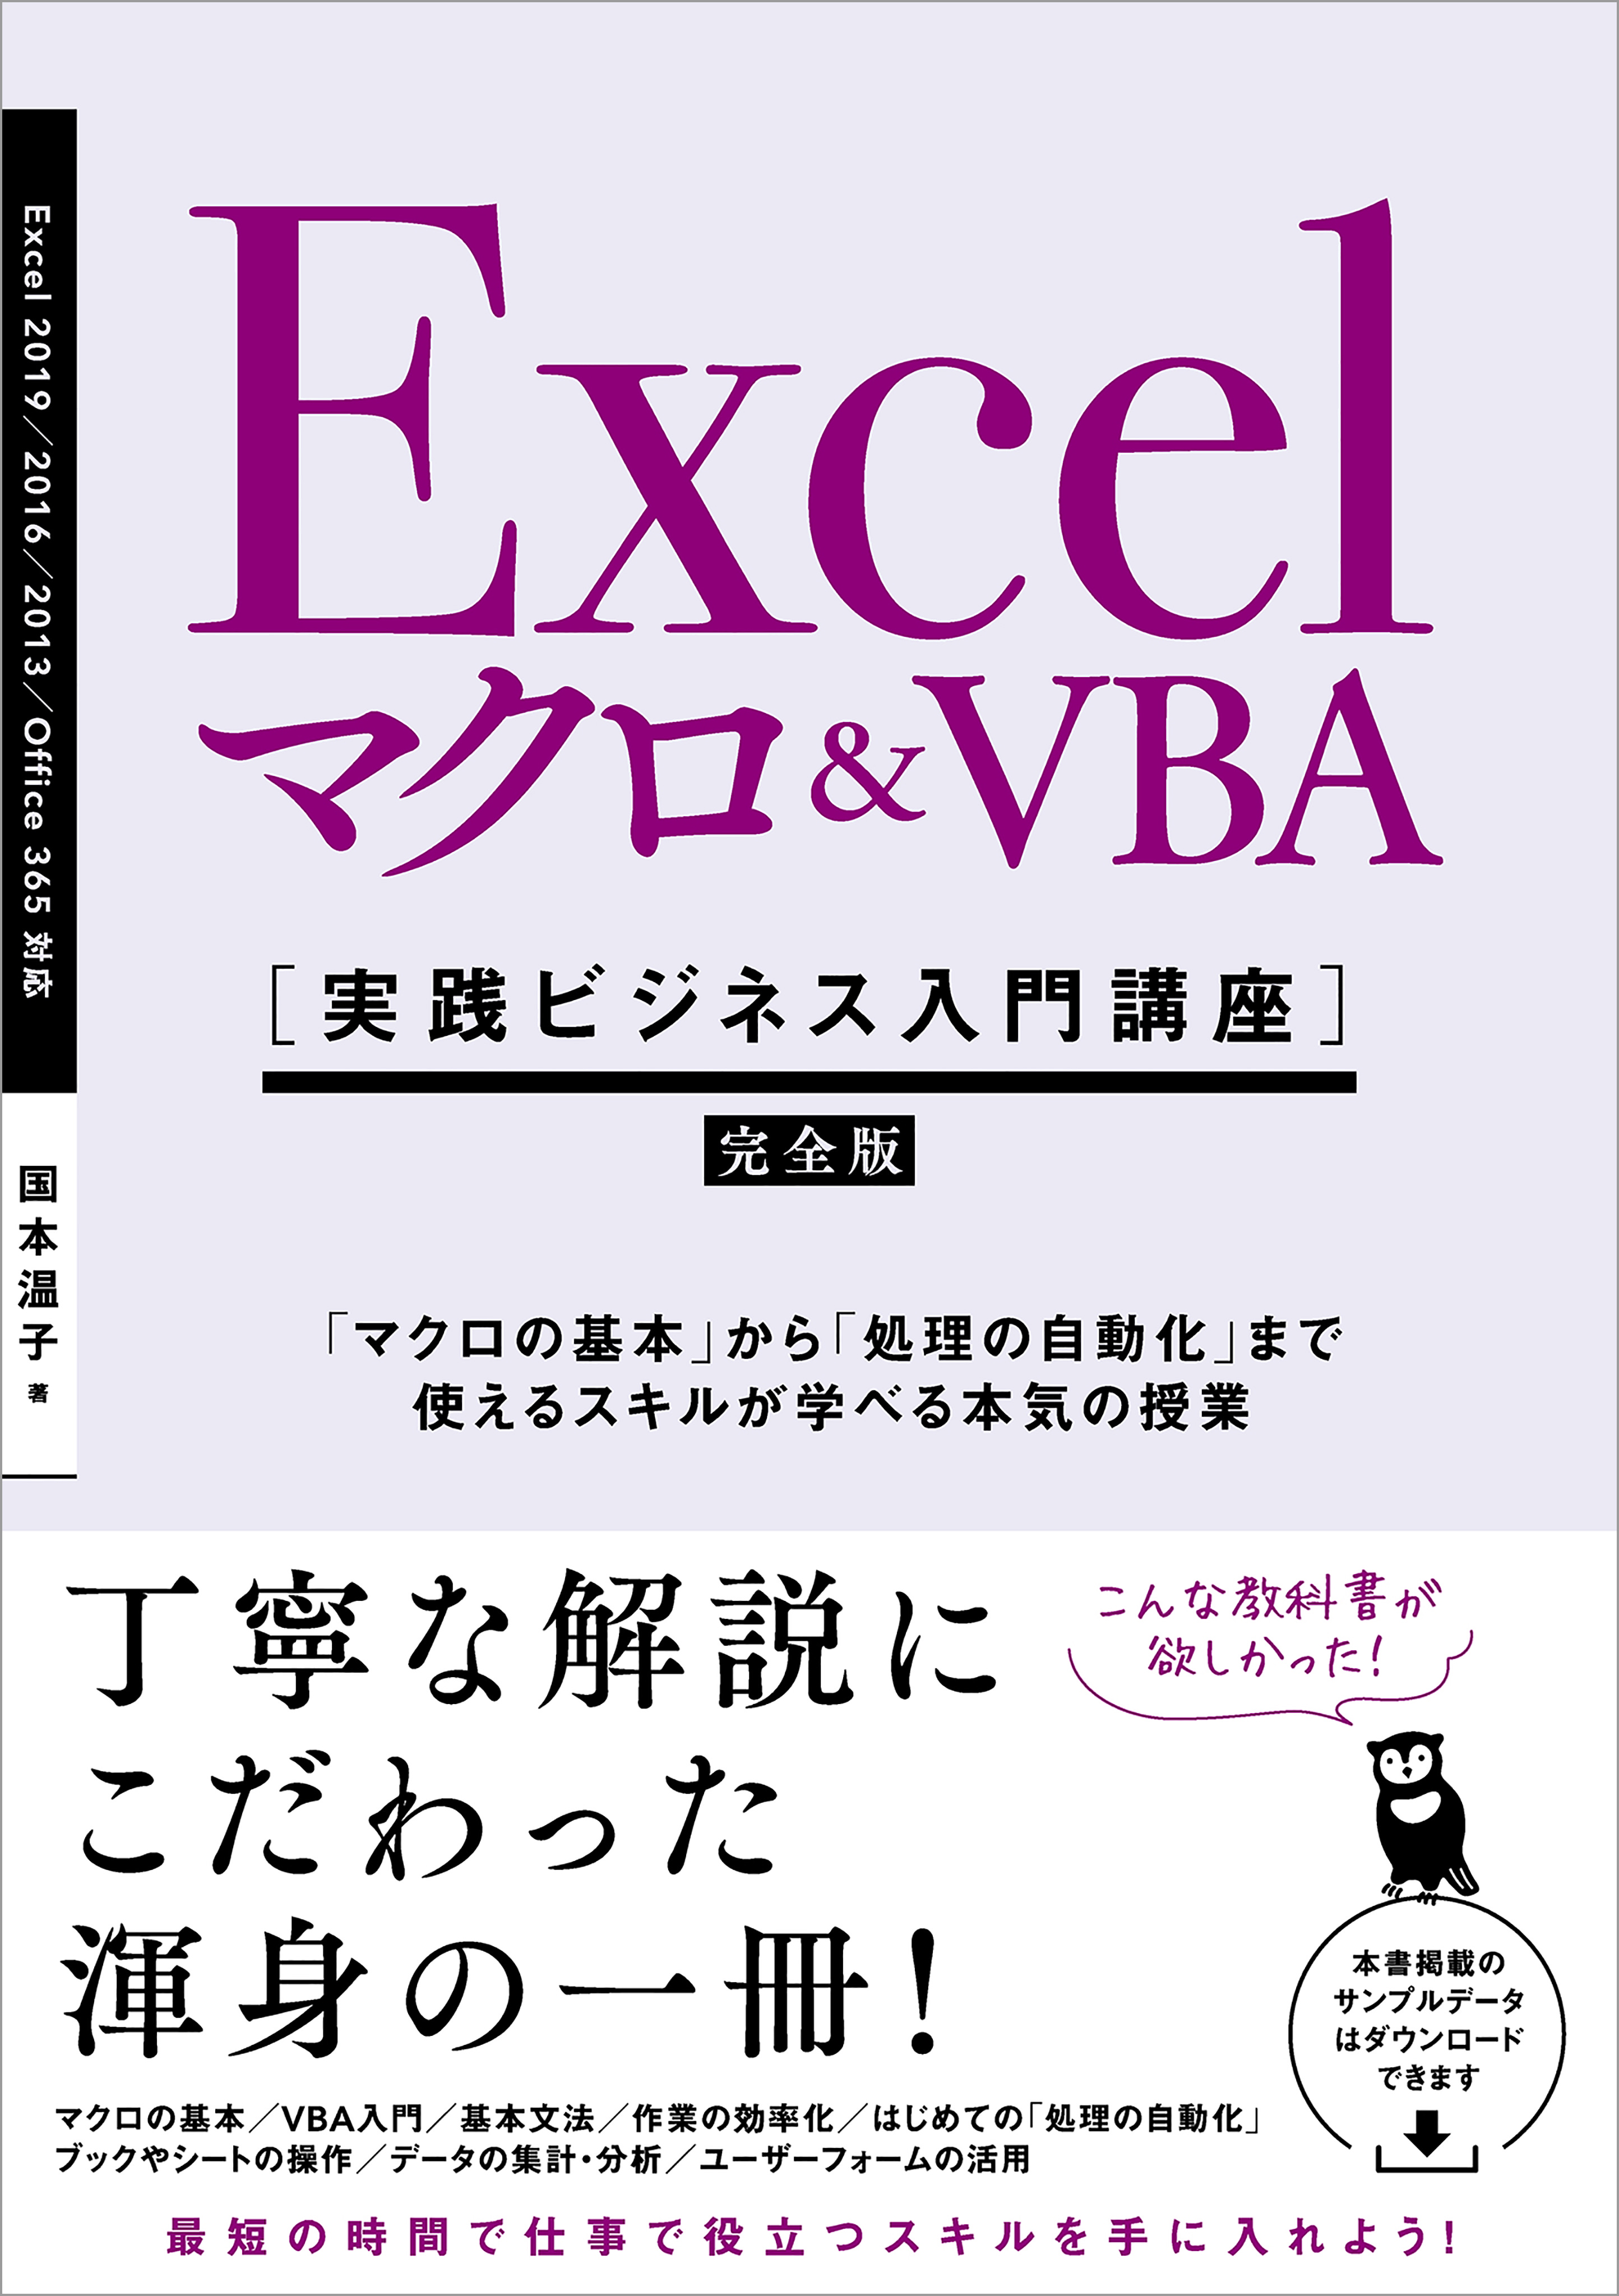 Excel 2019/2016/2013 マクロ/VBA-